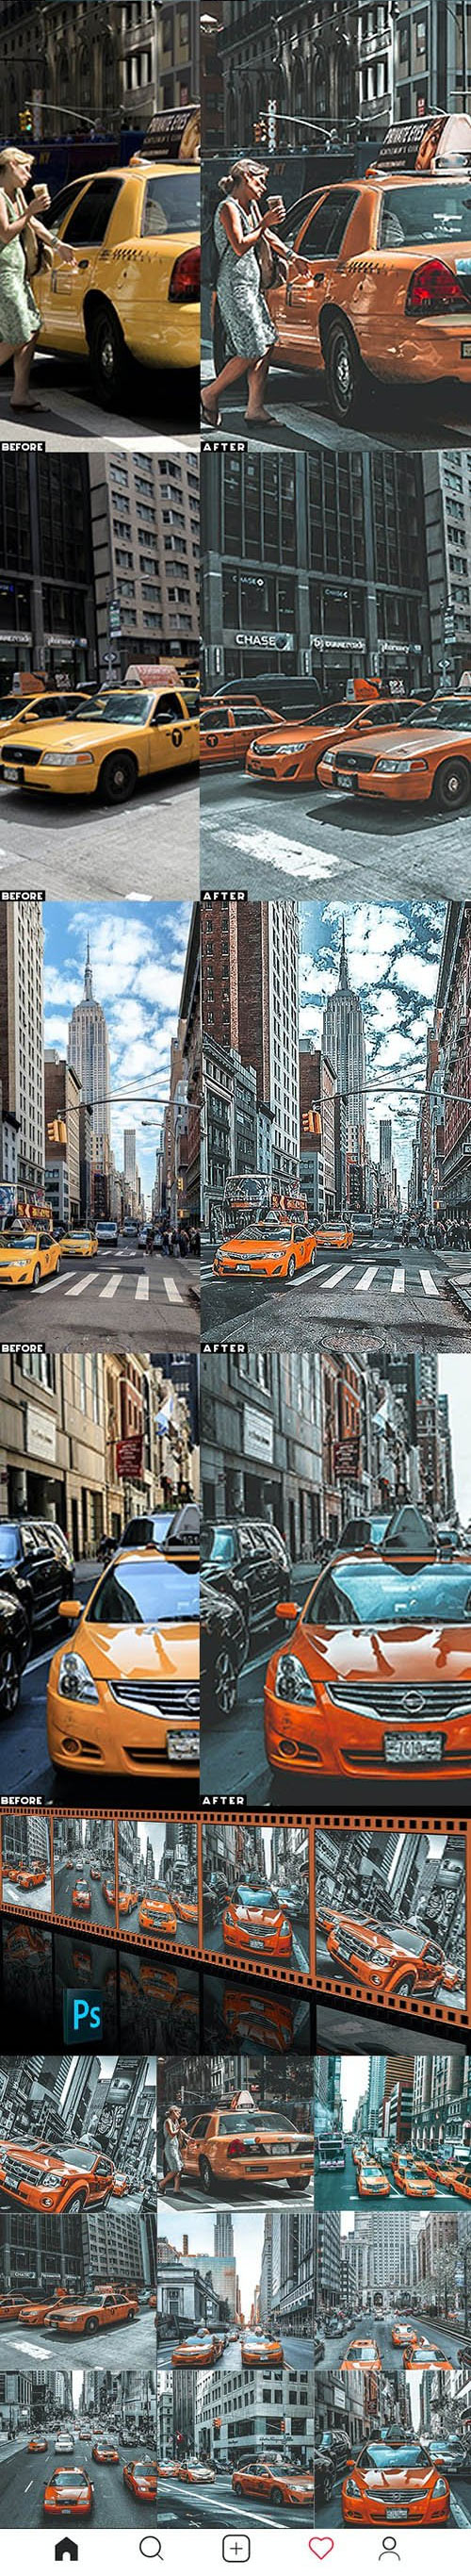 New York Street Photoshop Actions 27185178